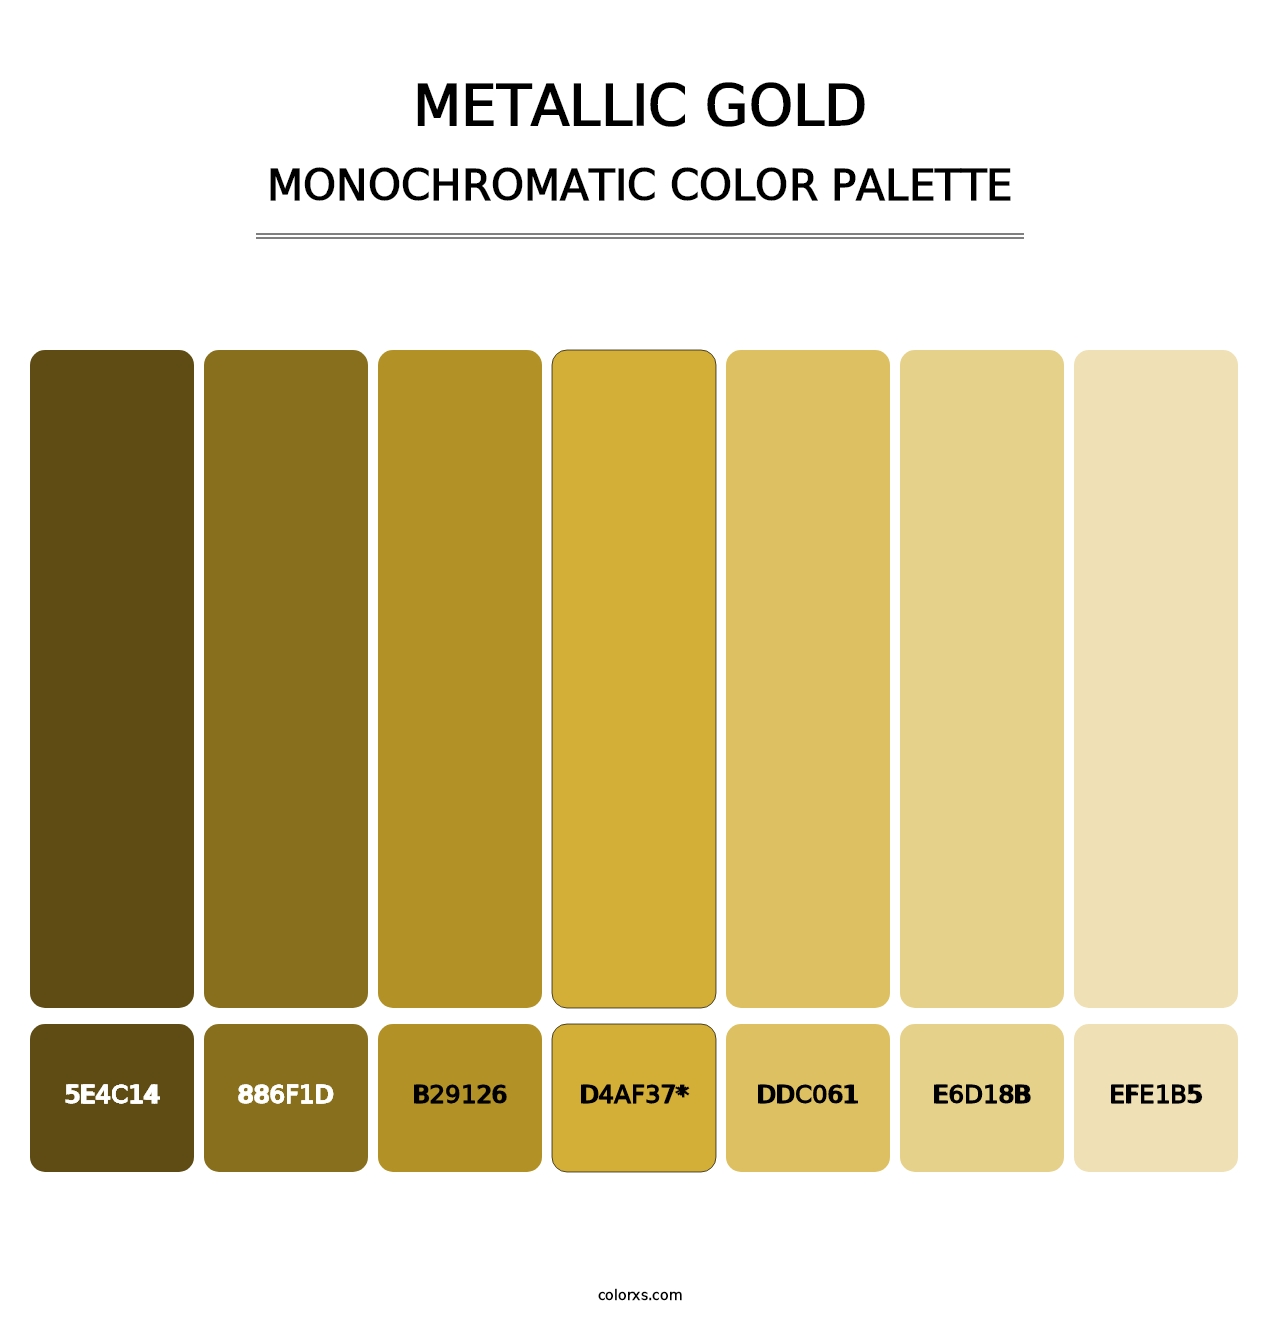 Metallic Gold - Monochromatic Color Palette